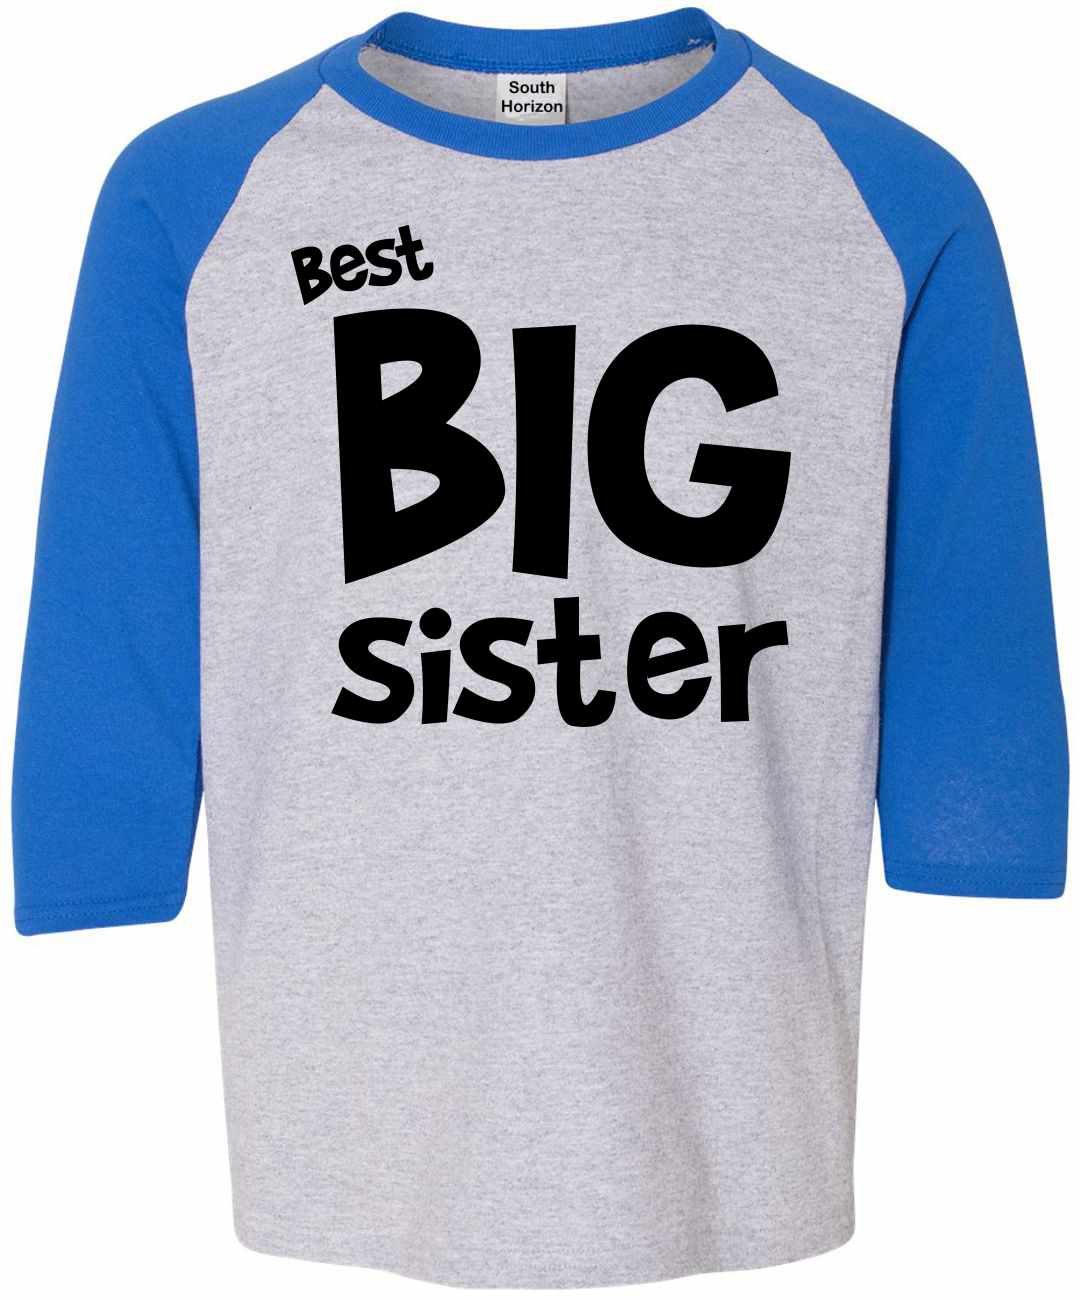 Best Big Sister on Youth Baseball Shirt